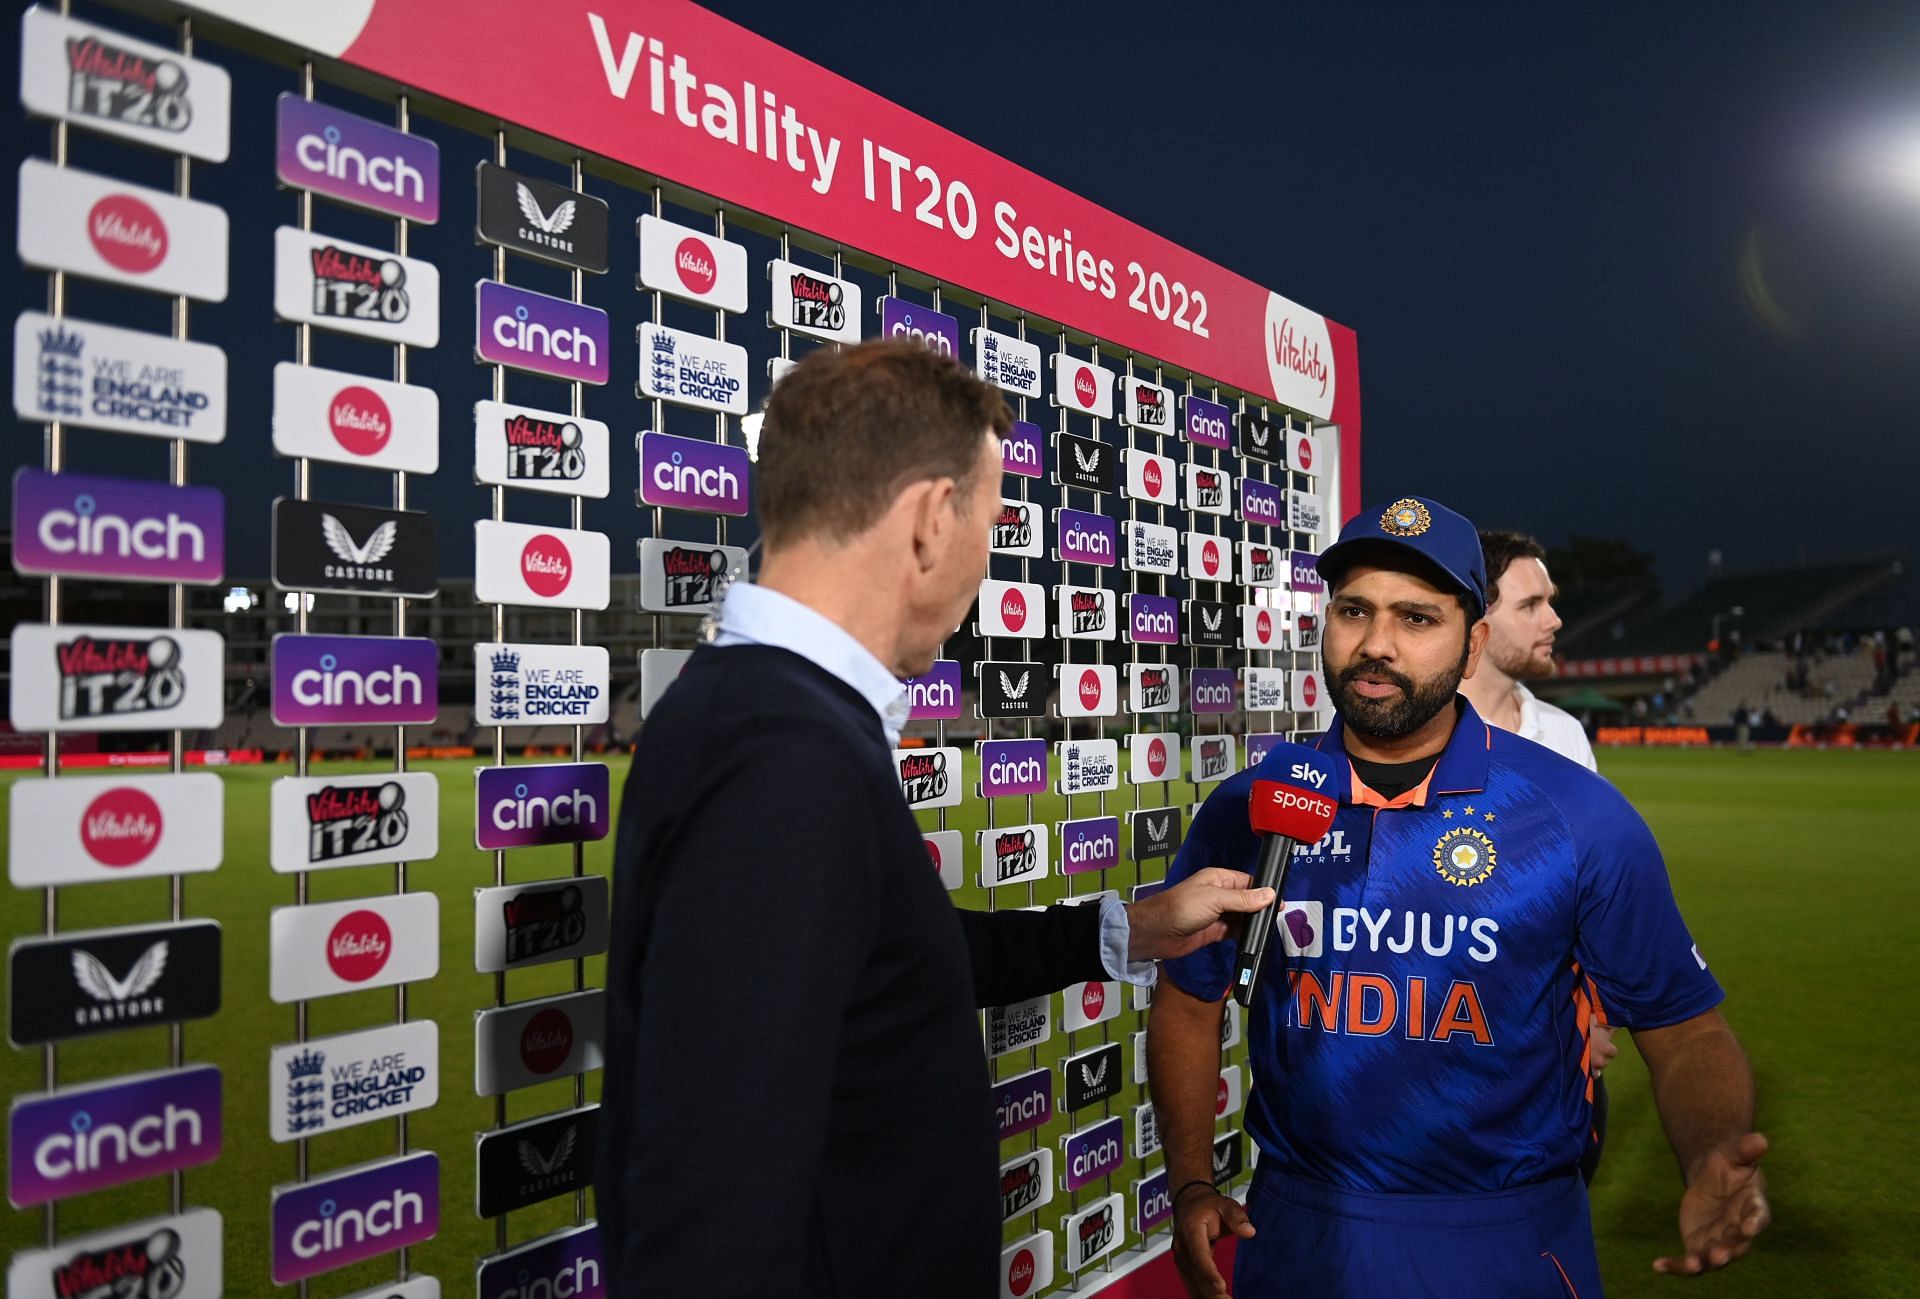 England v India - 1st Vitality IT20